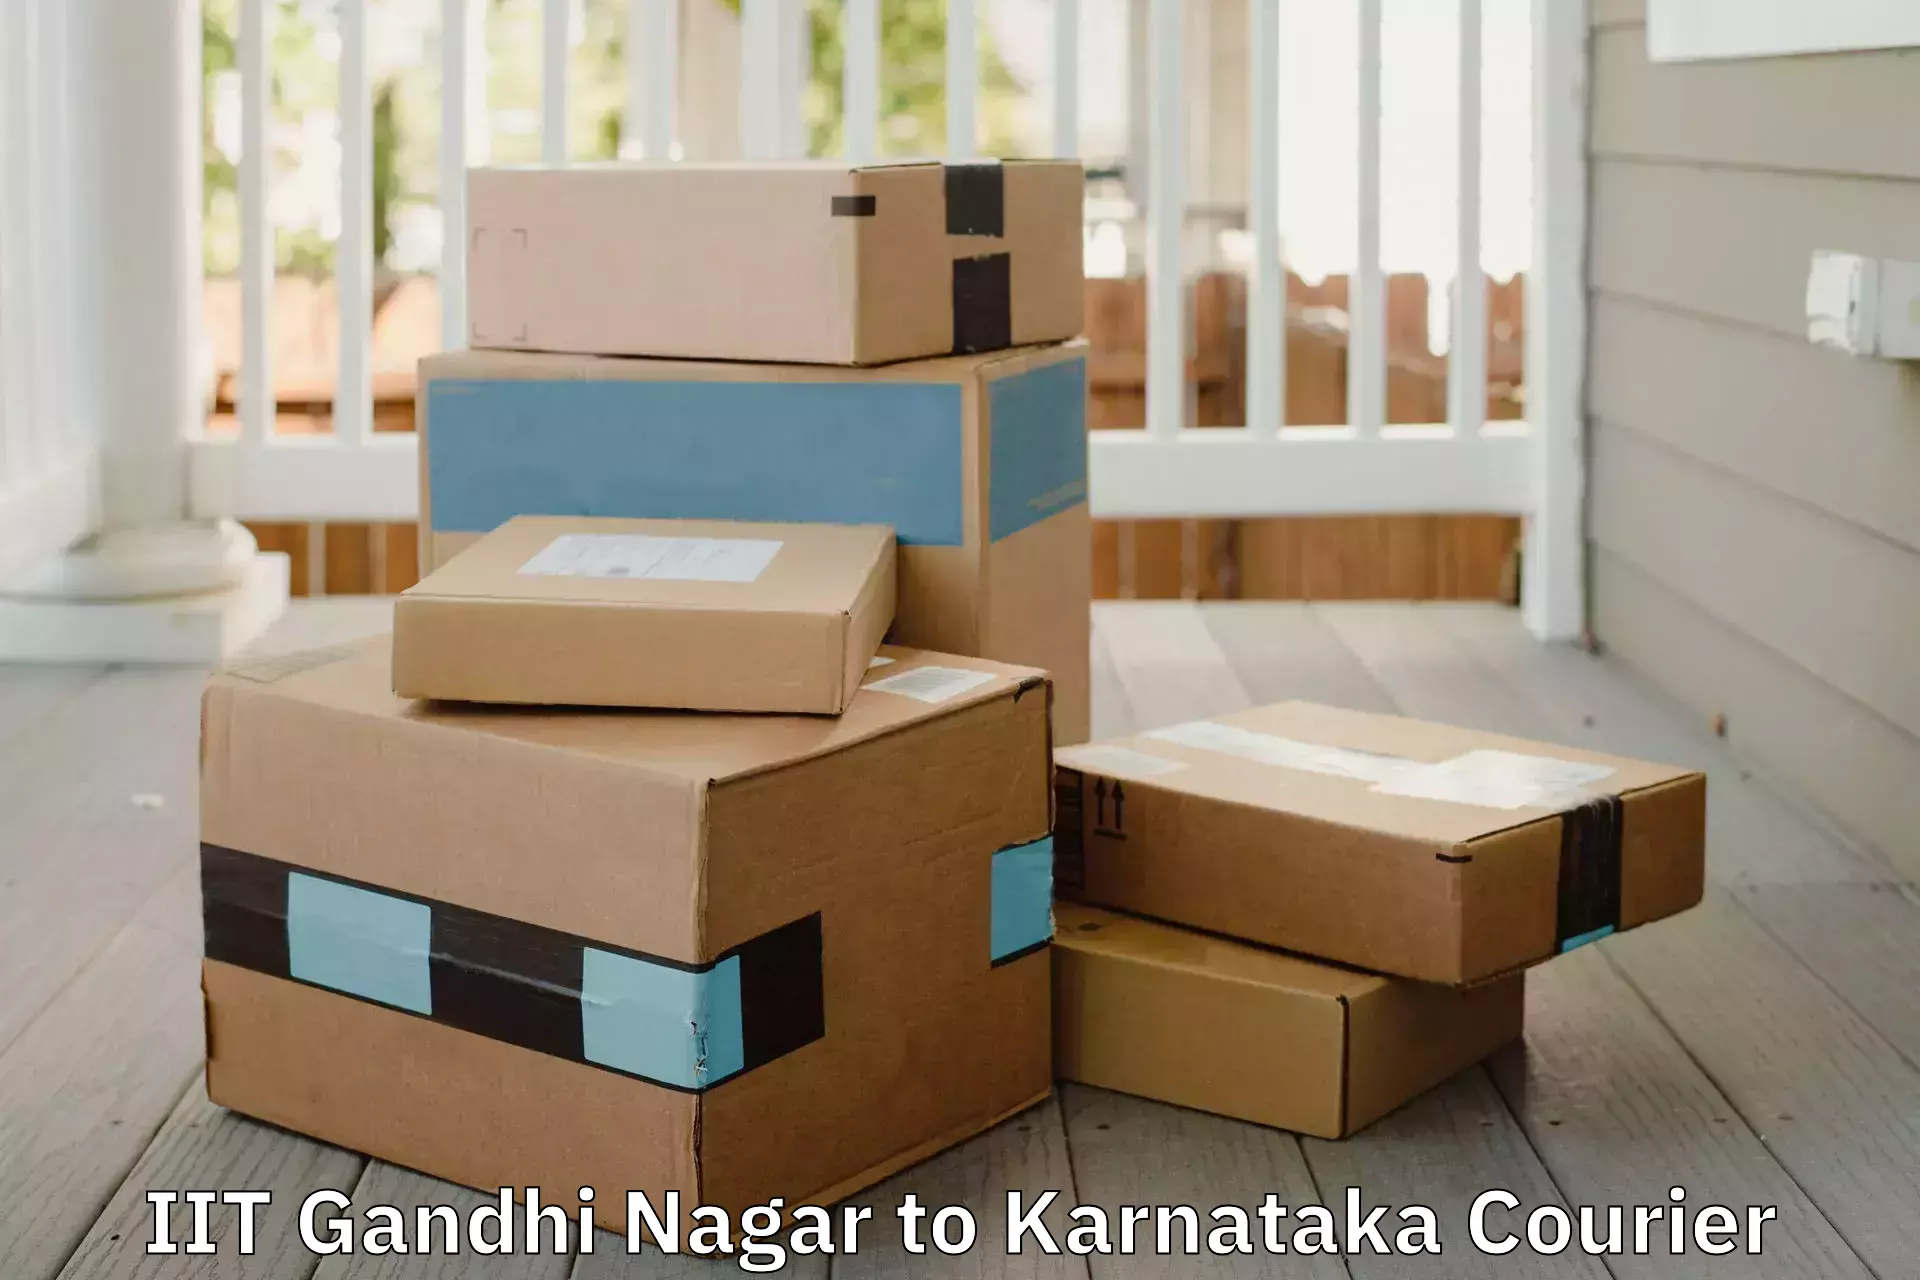 Moving and storage services IIT Gandhi Nagar to Dakshina Kannada